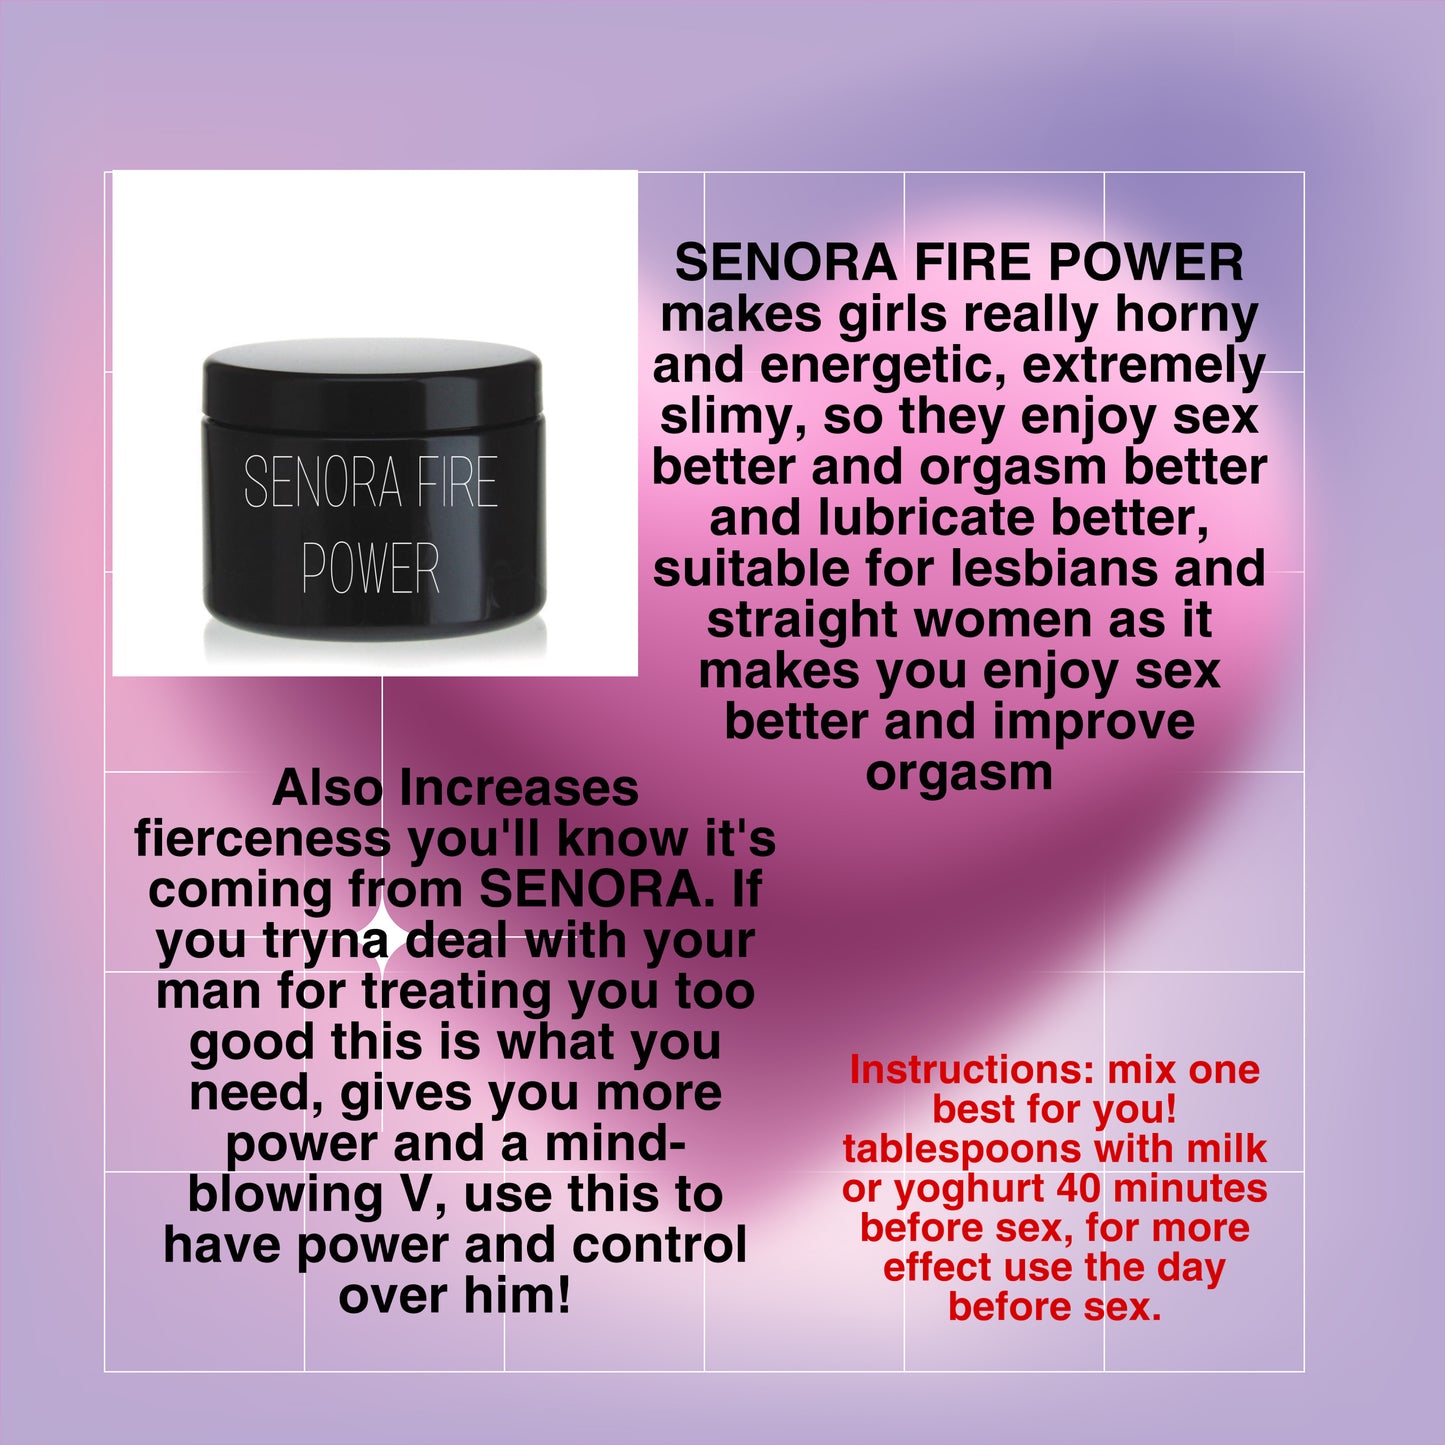 Senora fire power